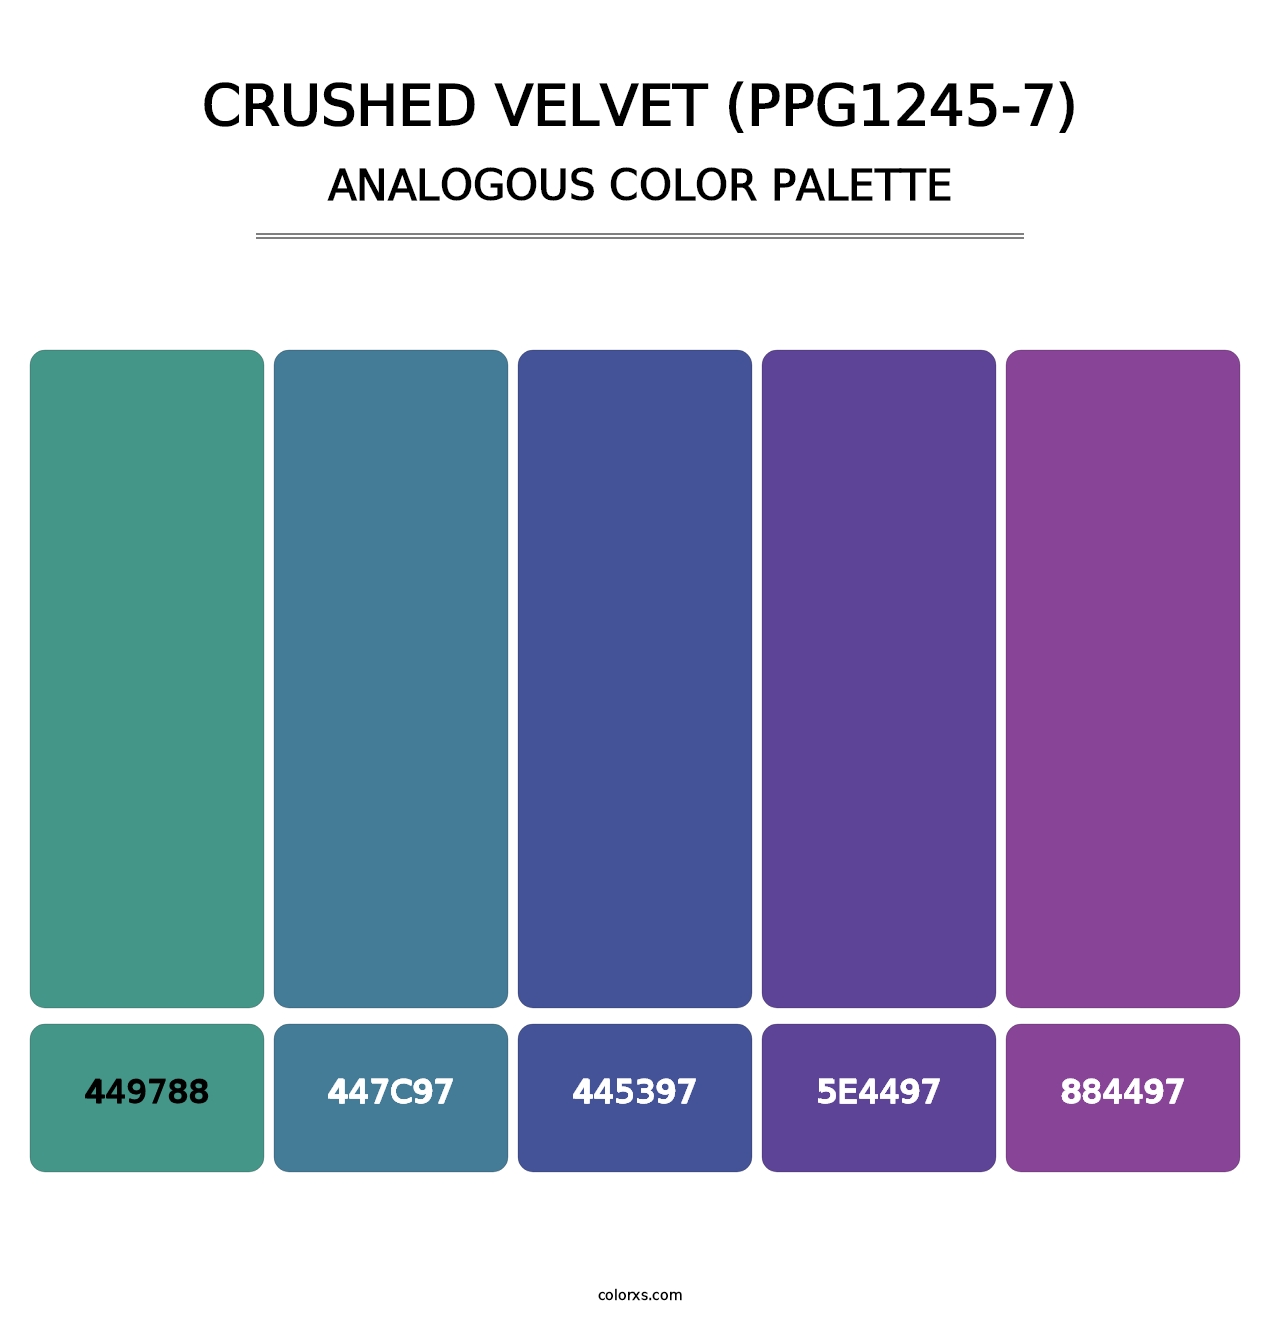 Crushed Velvet (PPG1245-7) - Analogous Color Palette